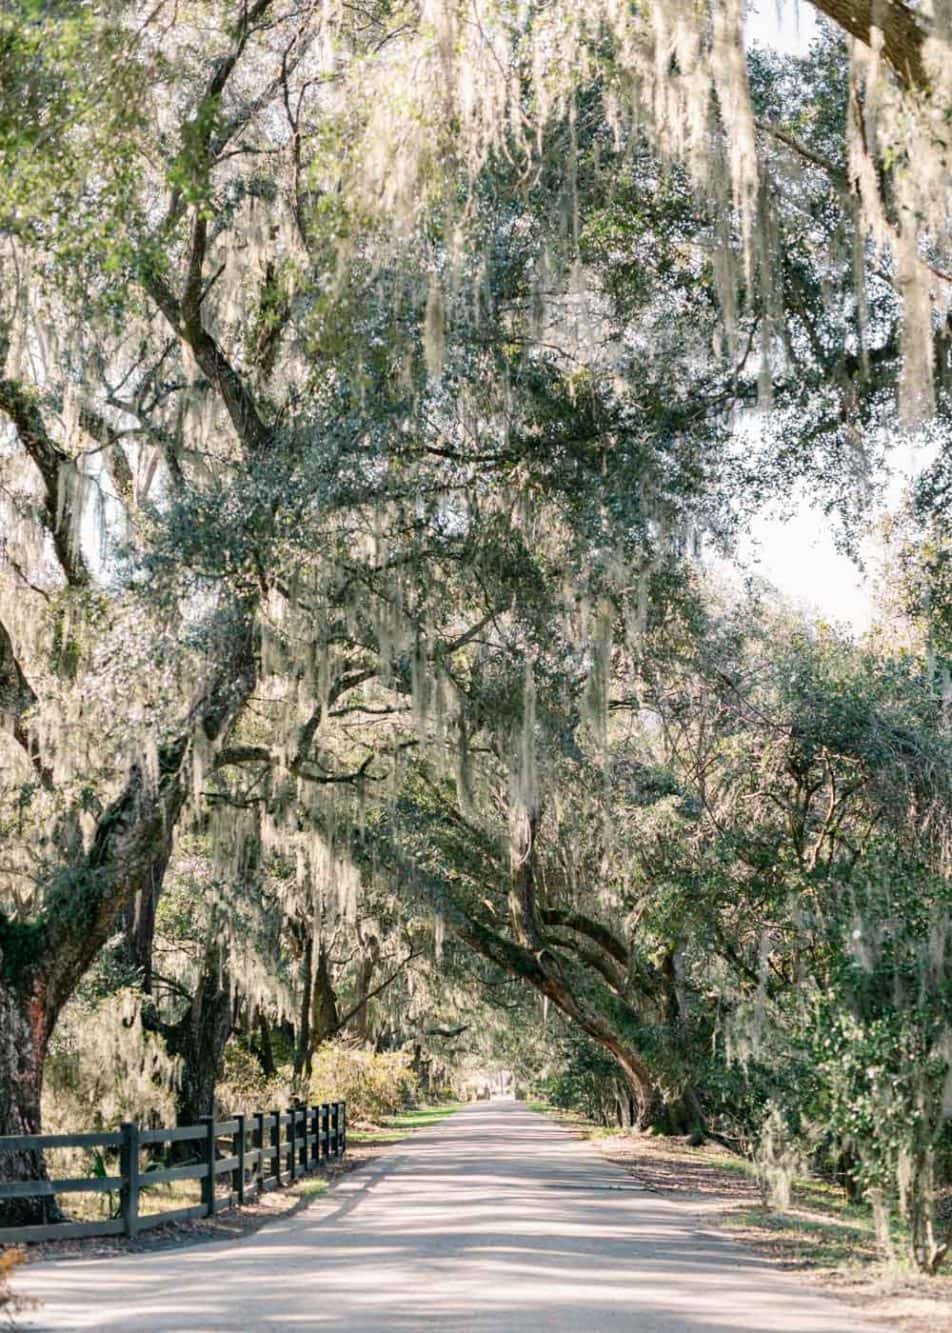 Spanish moss on trees at Magnolia Plantation and Gardens in Charleston, South Carolina